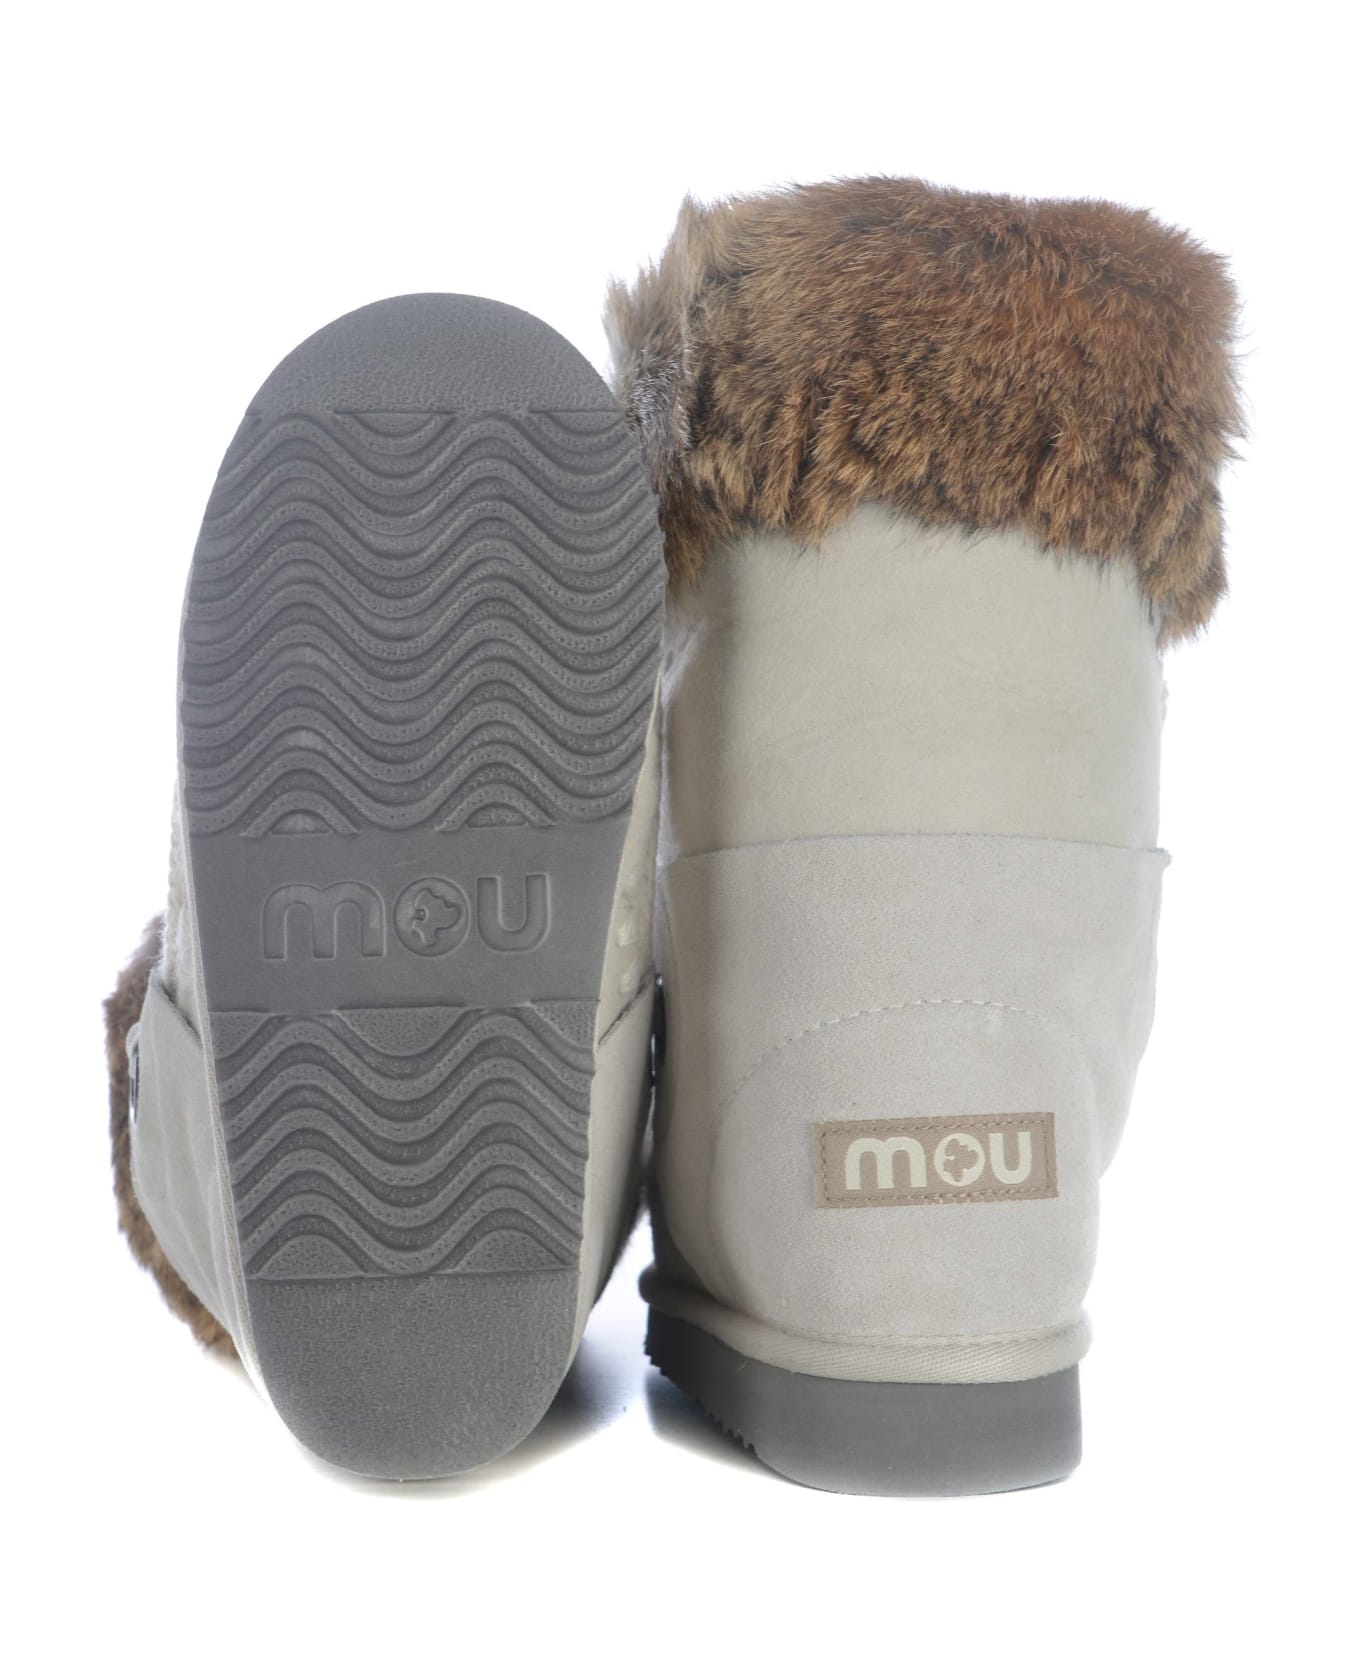 Mou Boots Mou "eskimolace" Made In Suede - Ghiaccio